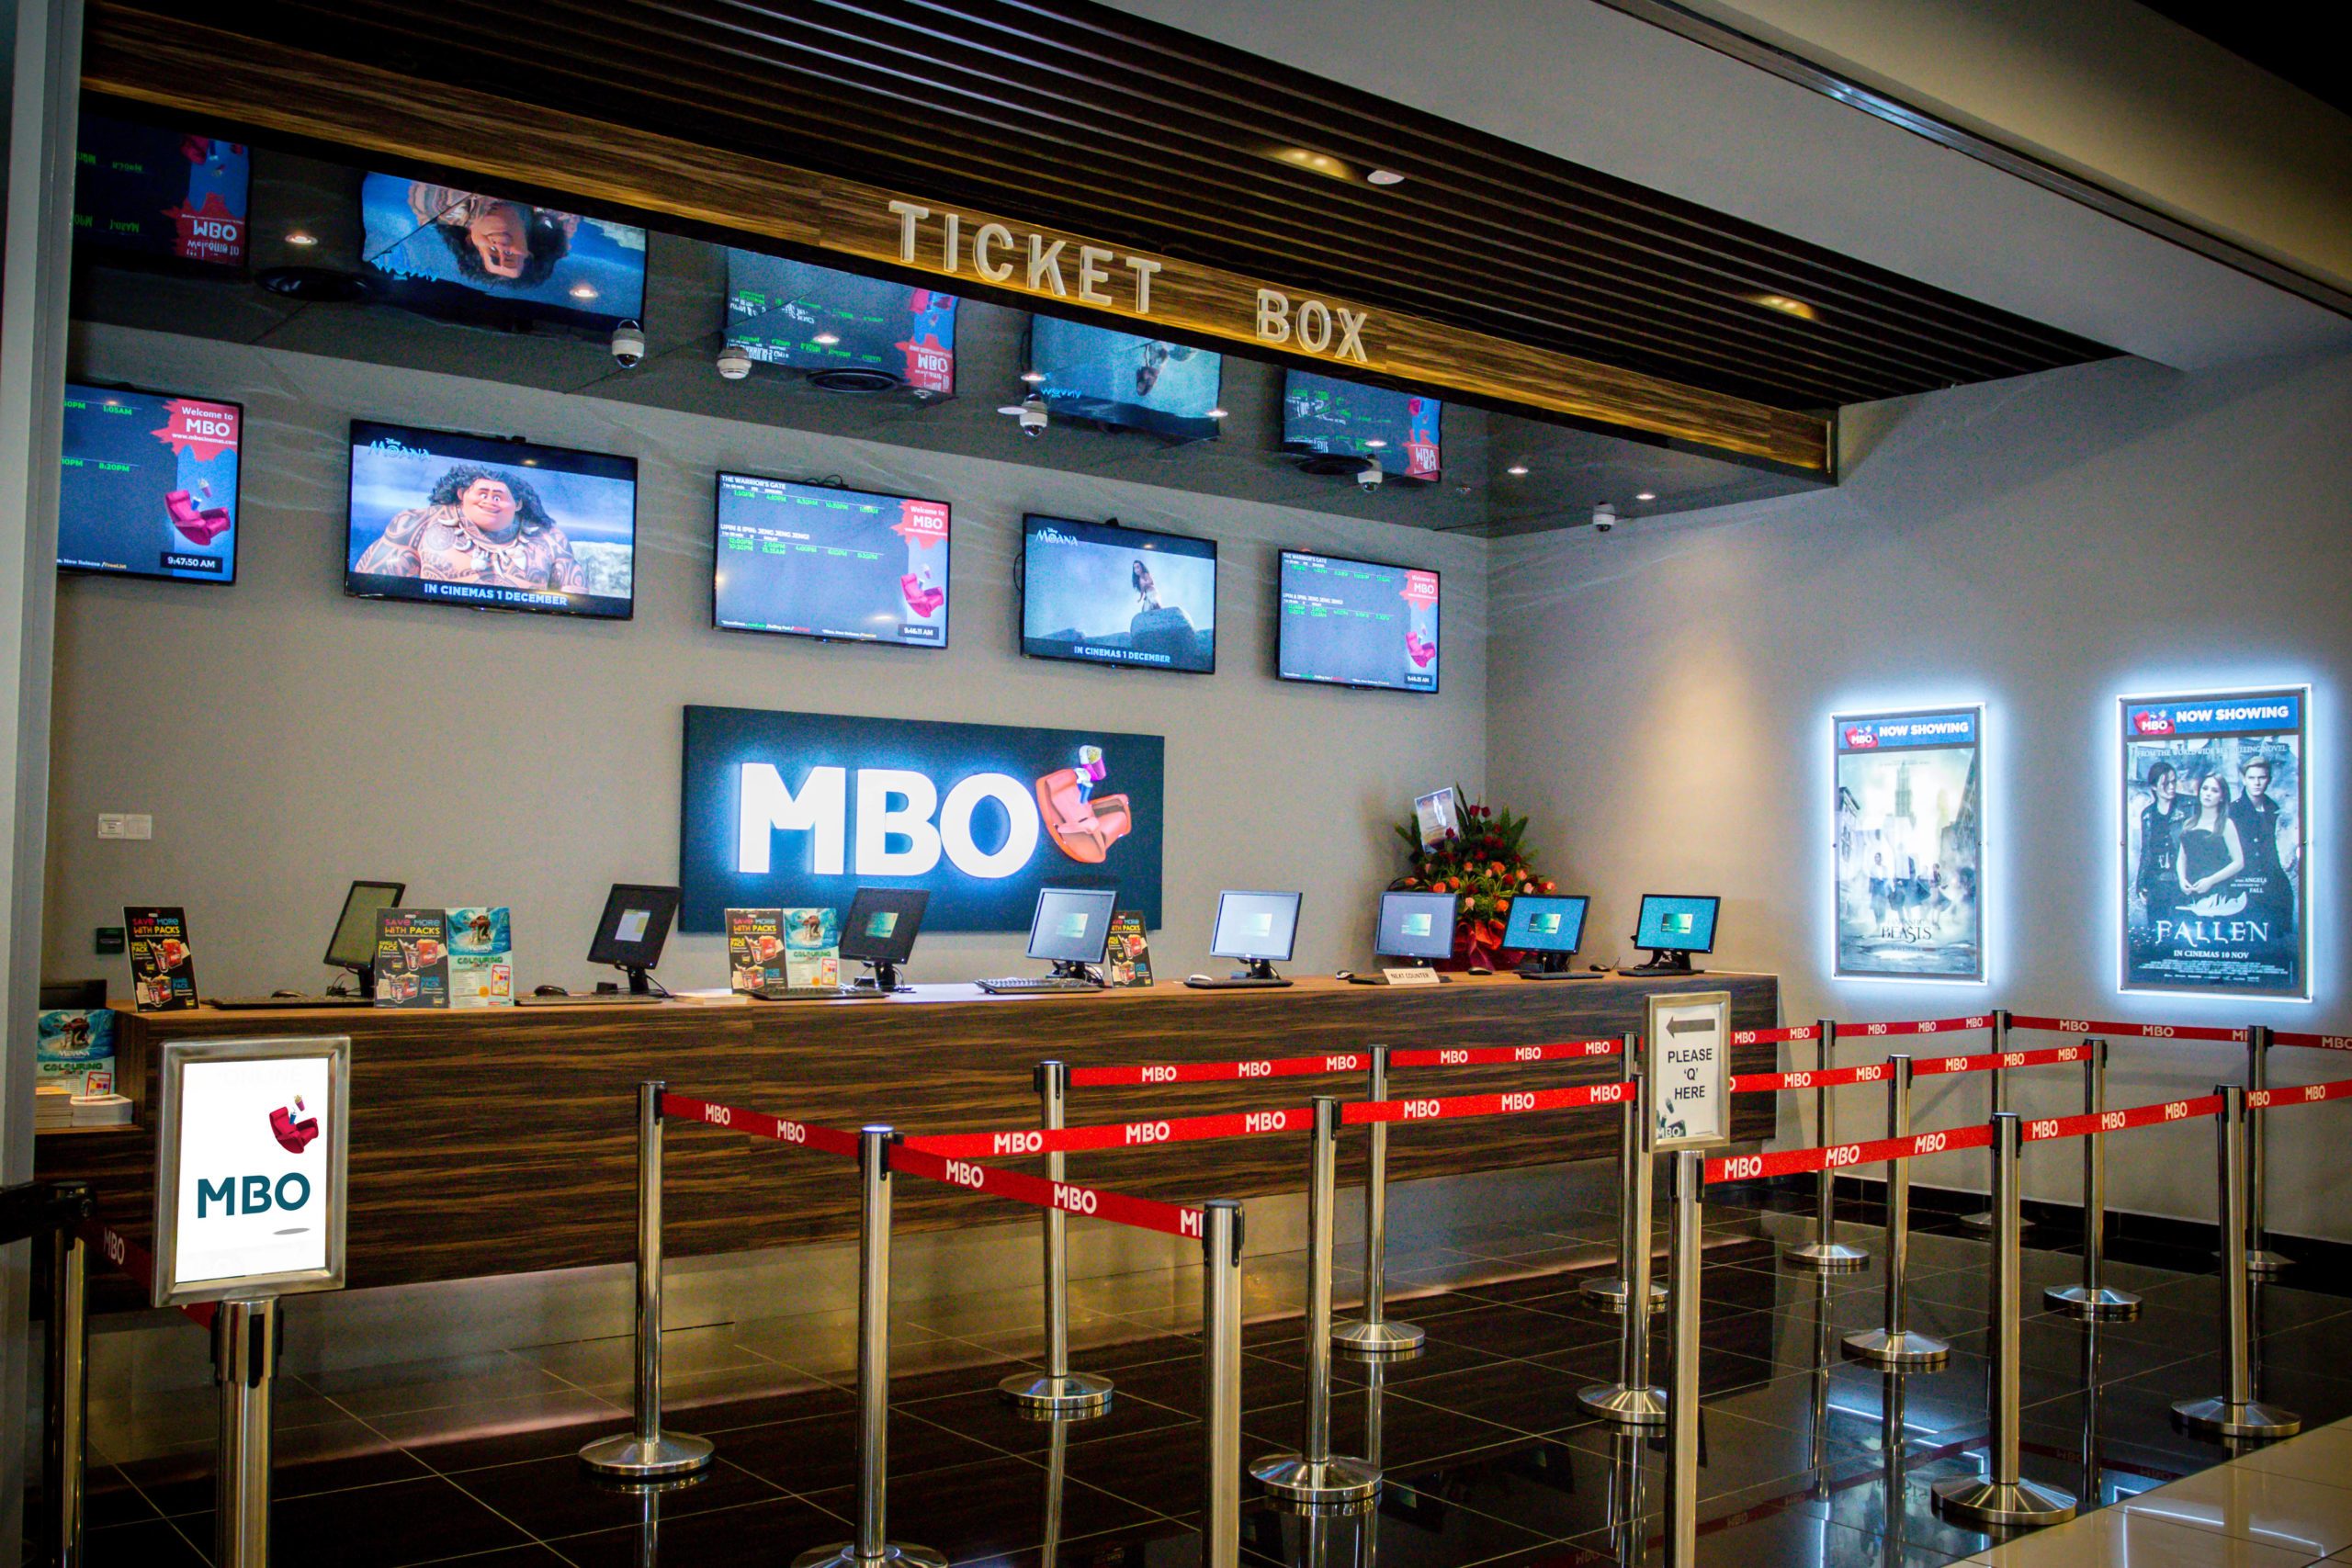 Navis-backed Malaysian cinema chain MBO faces liquidation